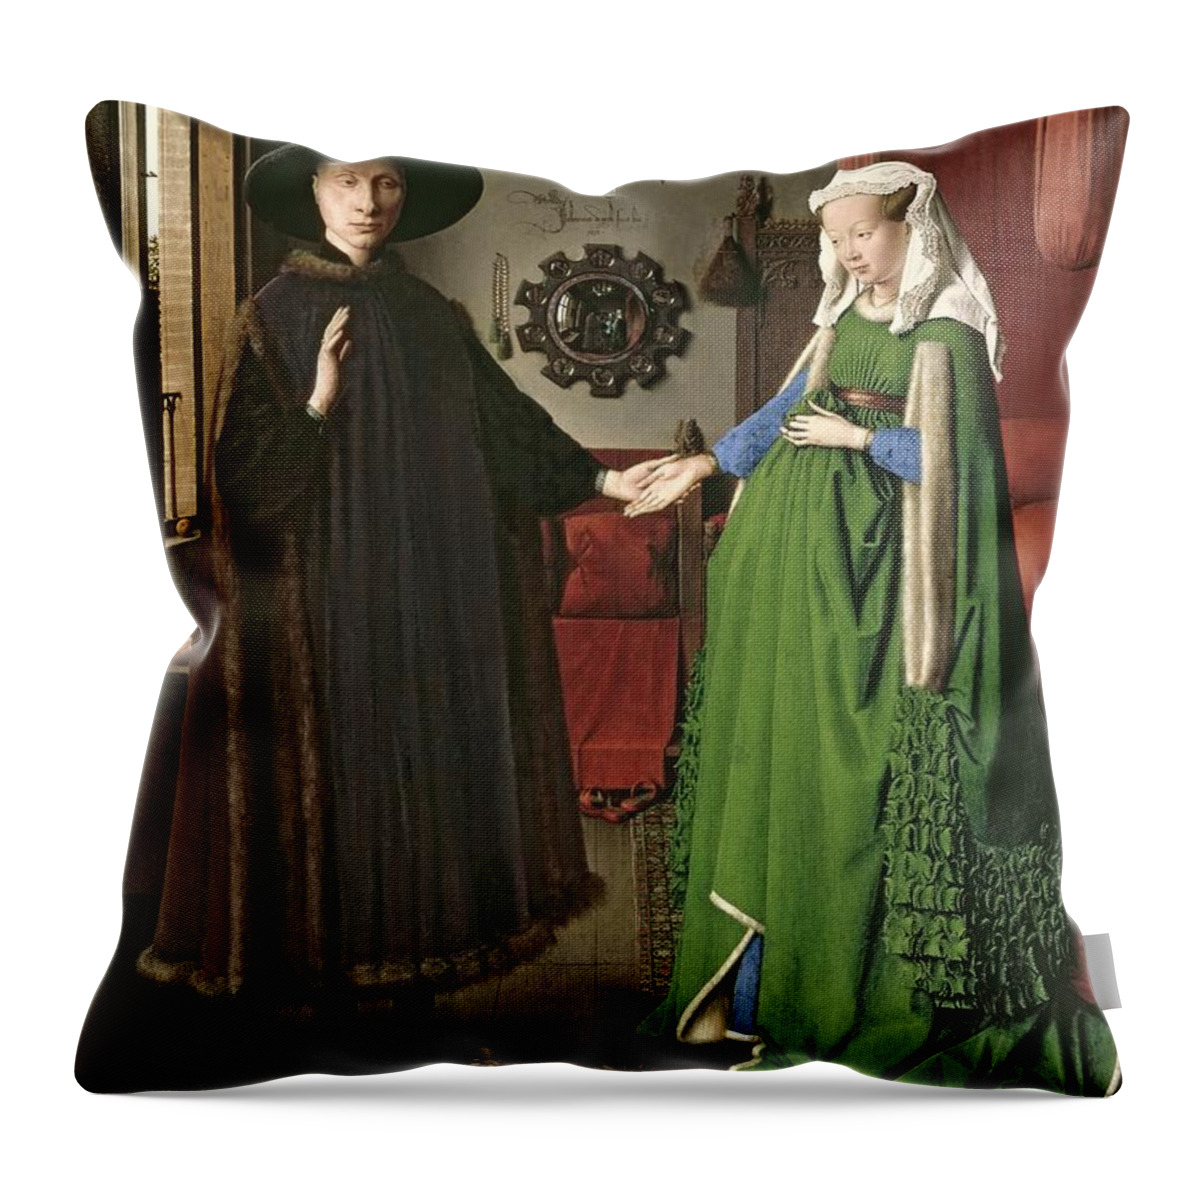 Jan Van Eyck Throw Pillow featuring the painting The Arnolfini Marriage by Jan van Eyck